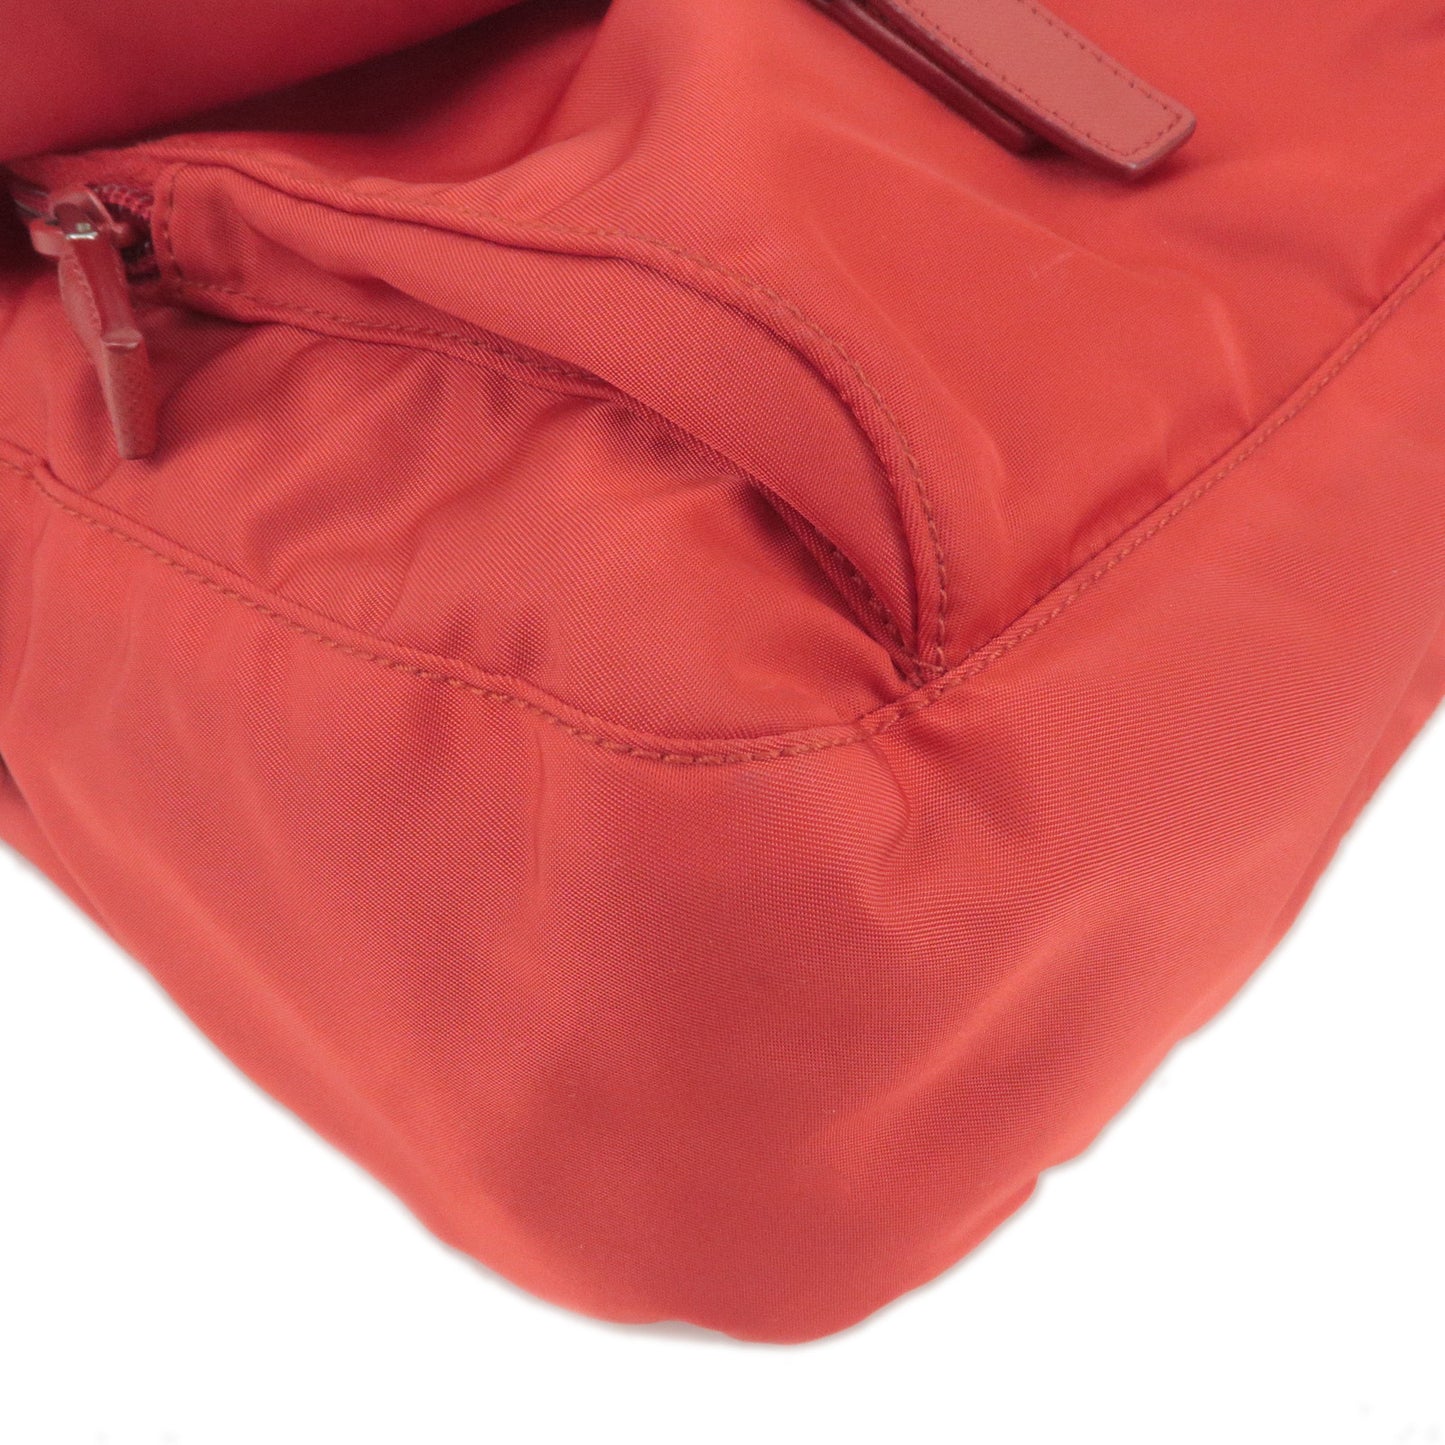 PRADA Logo Nylon Leather Shoulder Bag Cross Body Bag Red